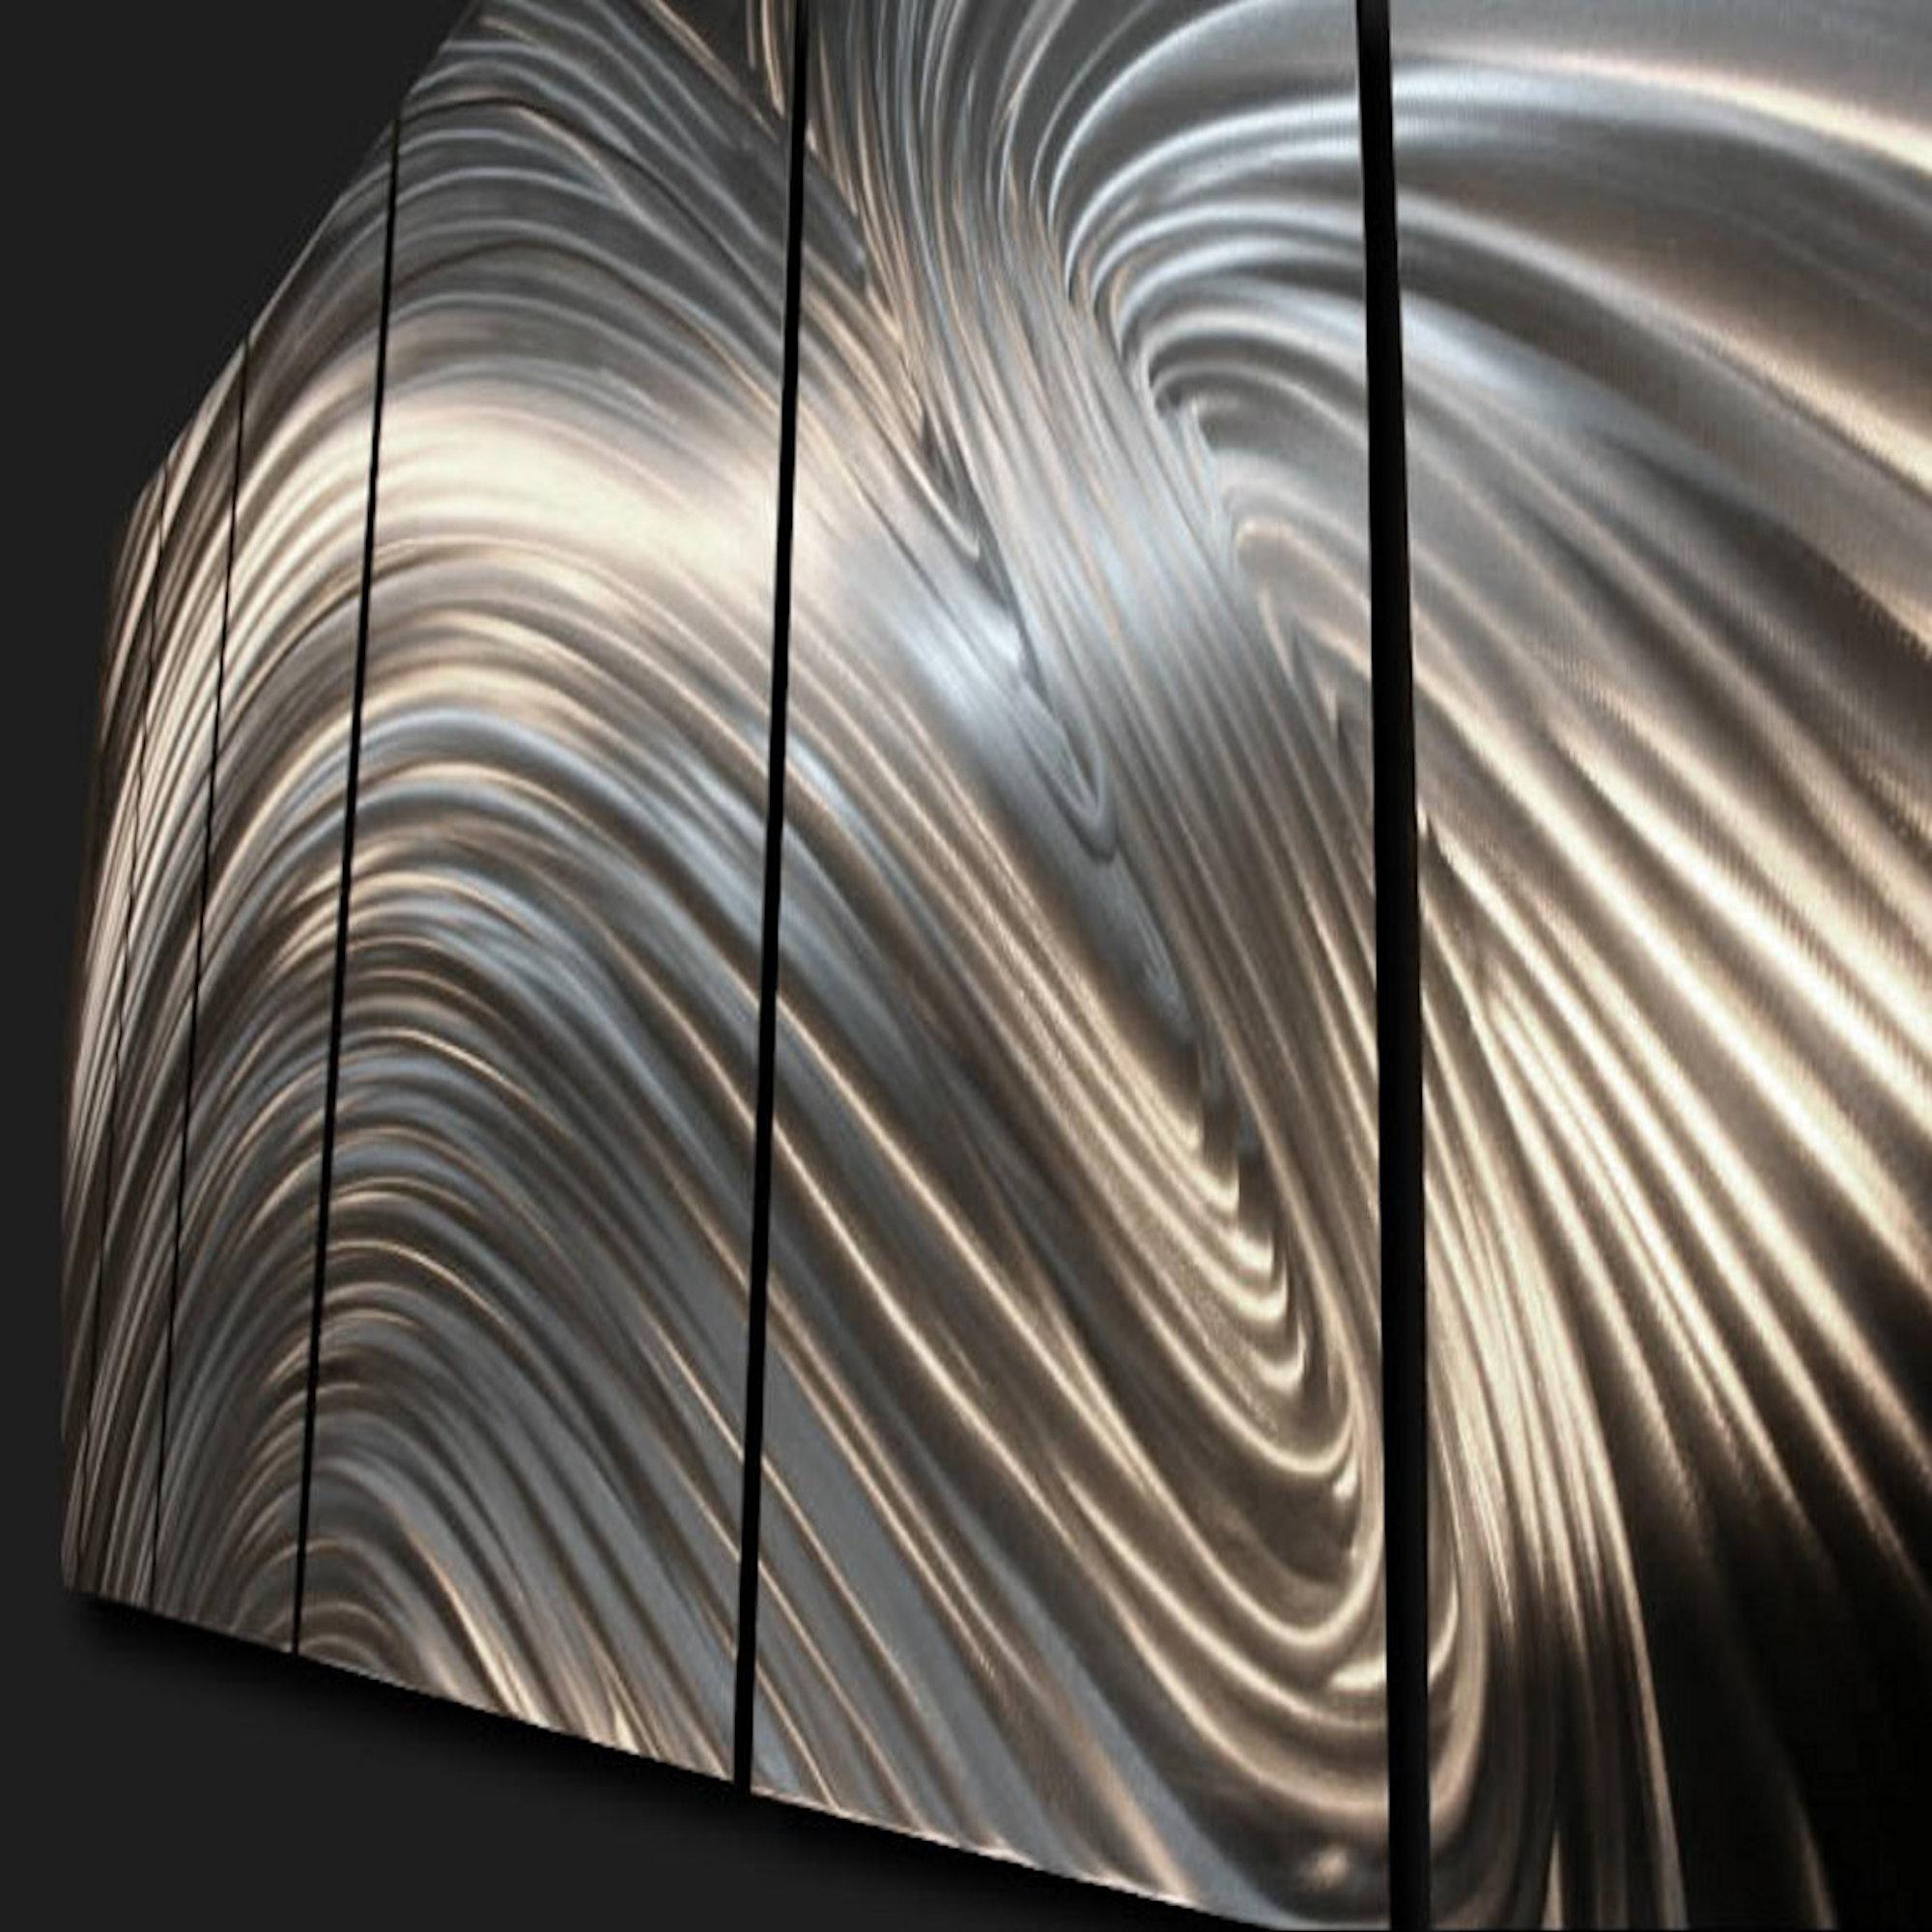 Title: Fusion 
Artist: Sebastian R.
Medium: Hand-Ground, Raw Metal Finish
5-panels hang individually. 
Overall dimensions 24